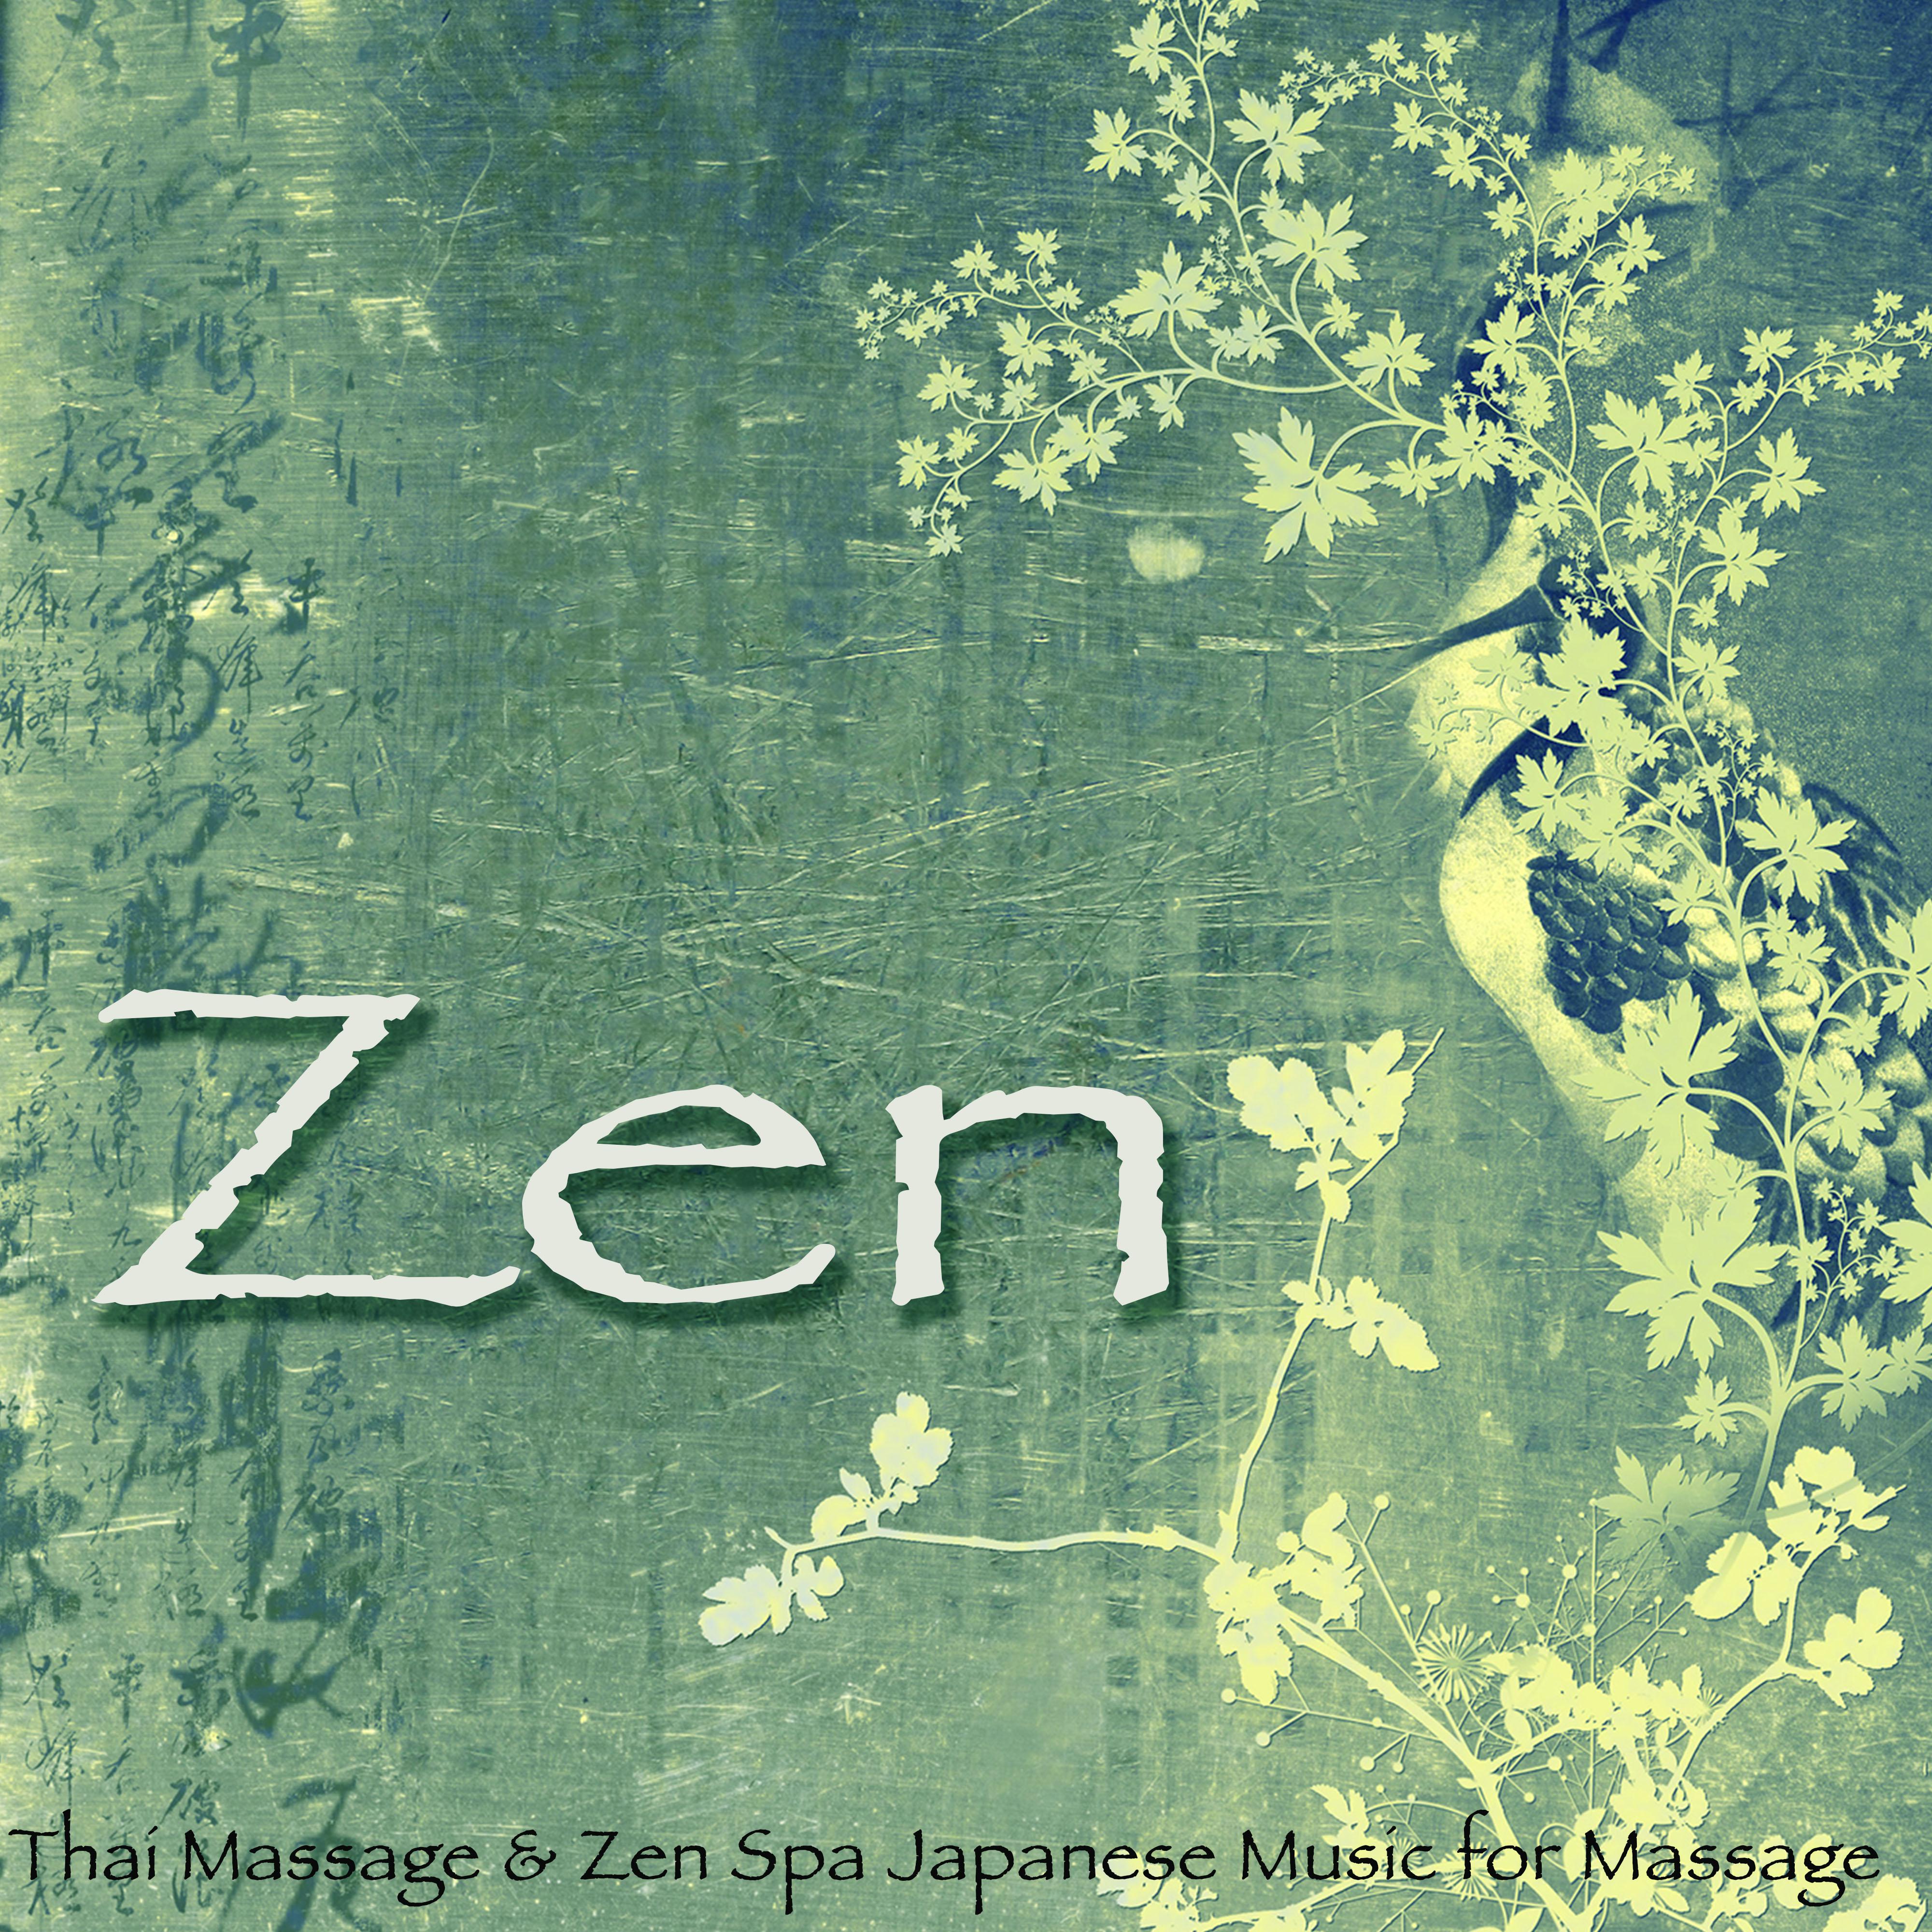 Nature Sounds in a Zen Garden (Murasaki)